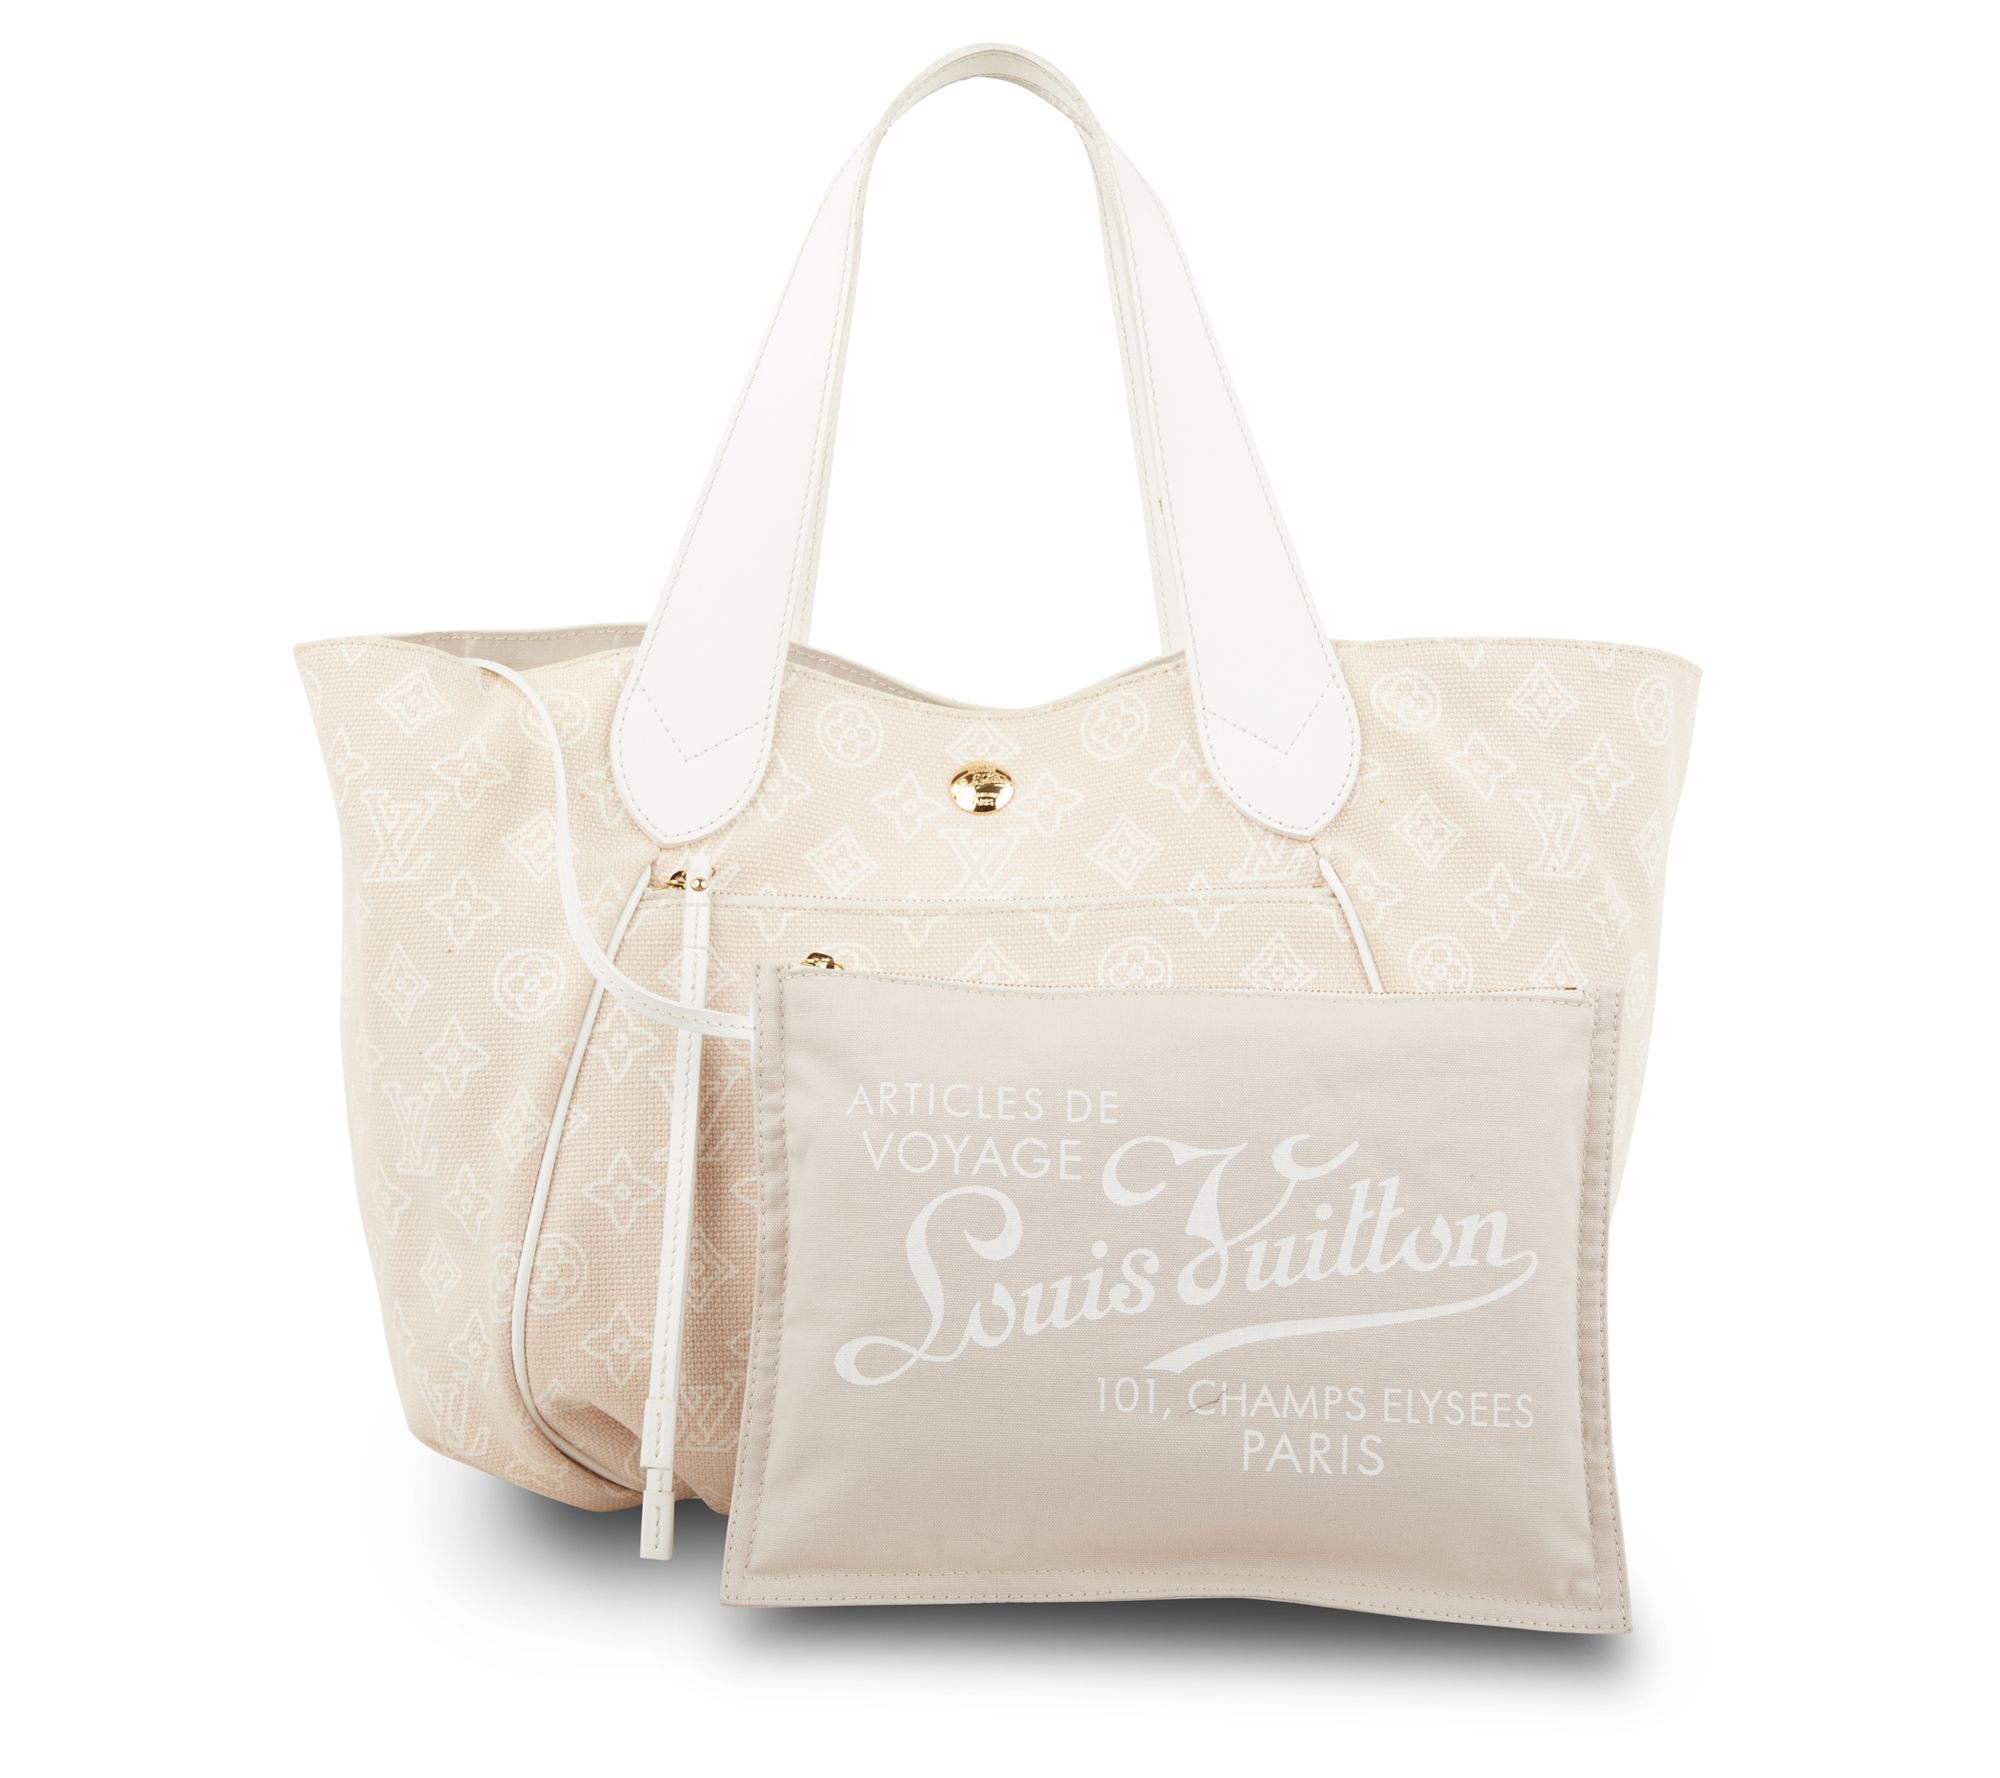 Louis Vuitton - Authenticated Handbag - Cotton Beige for Women, Very Good Condition